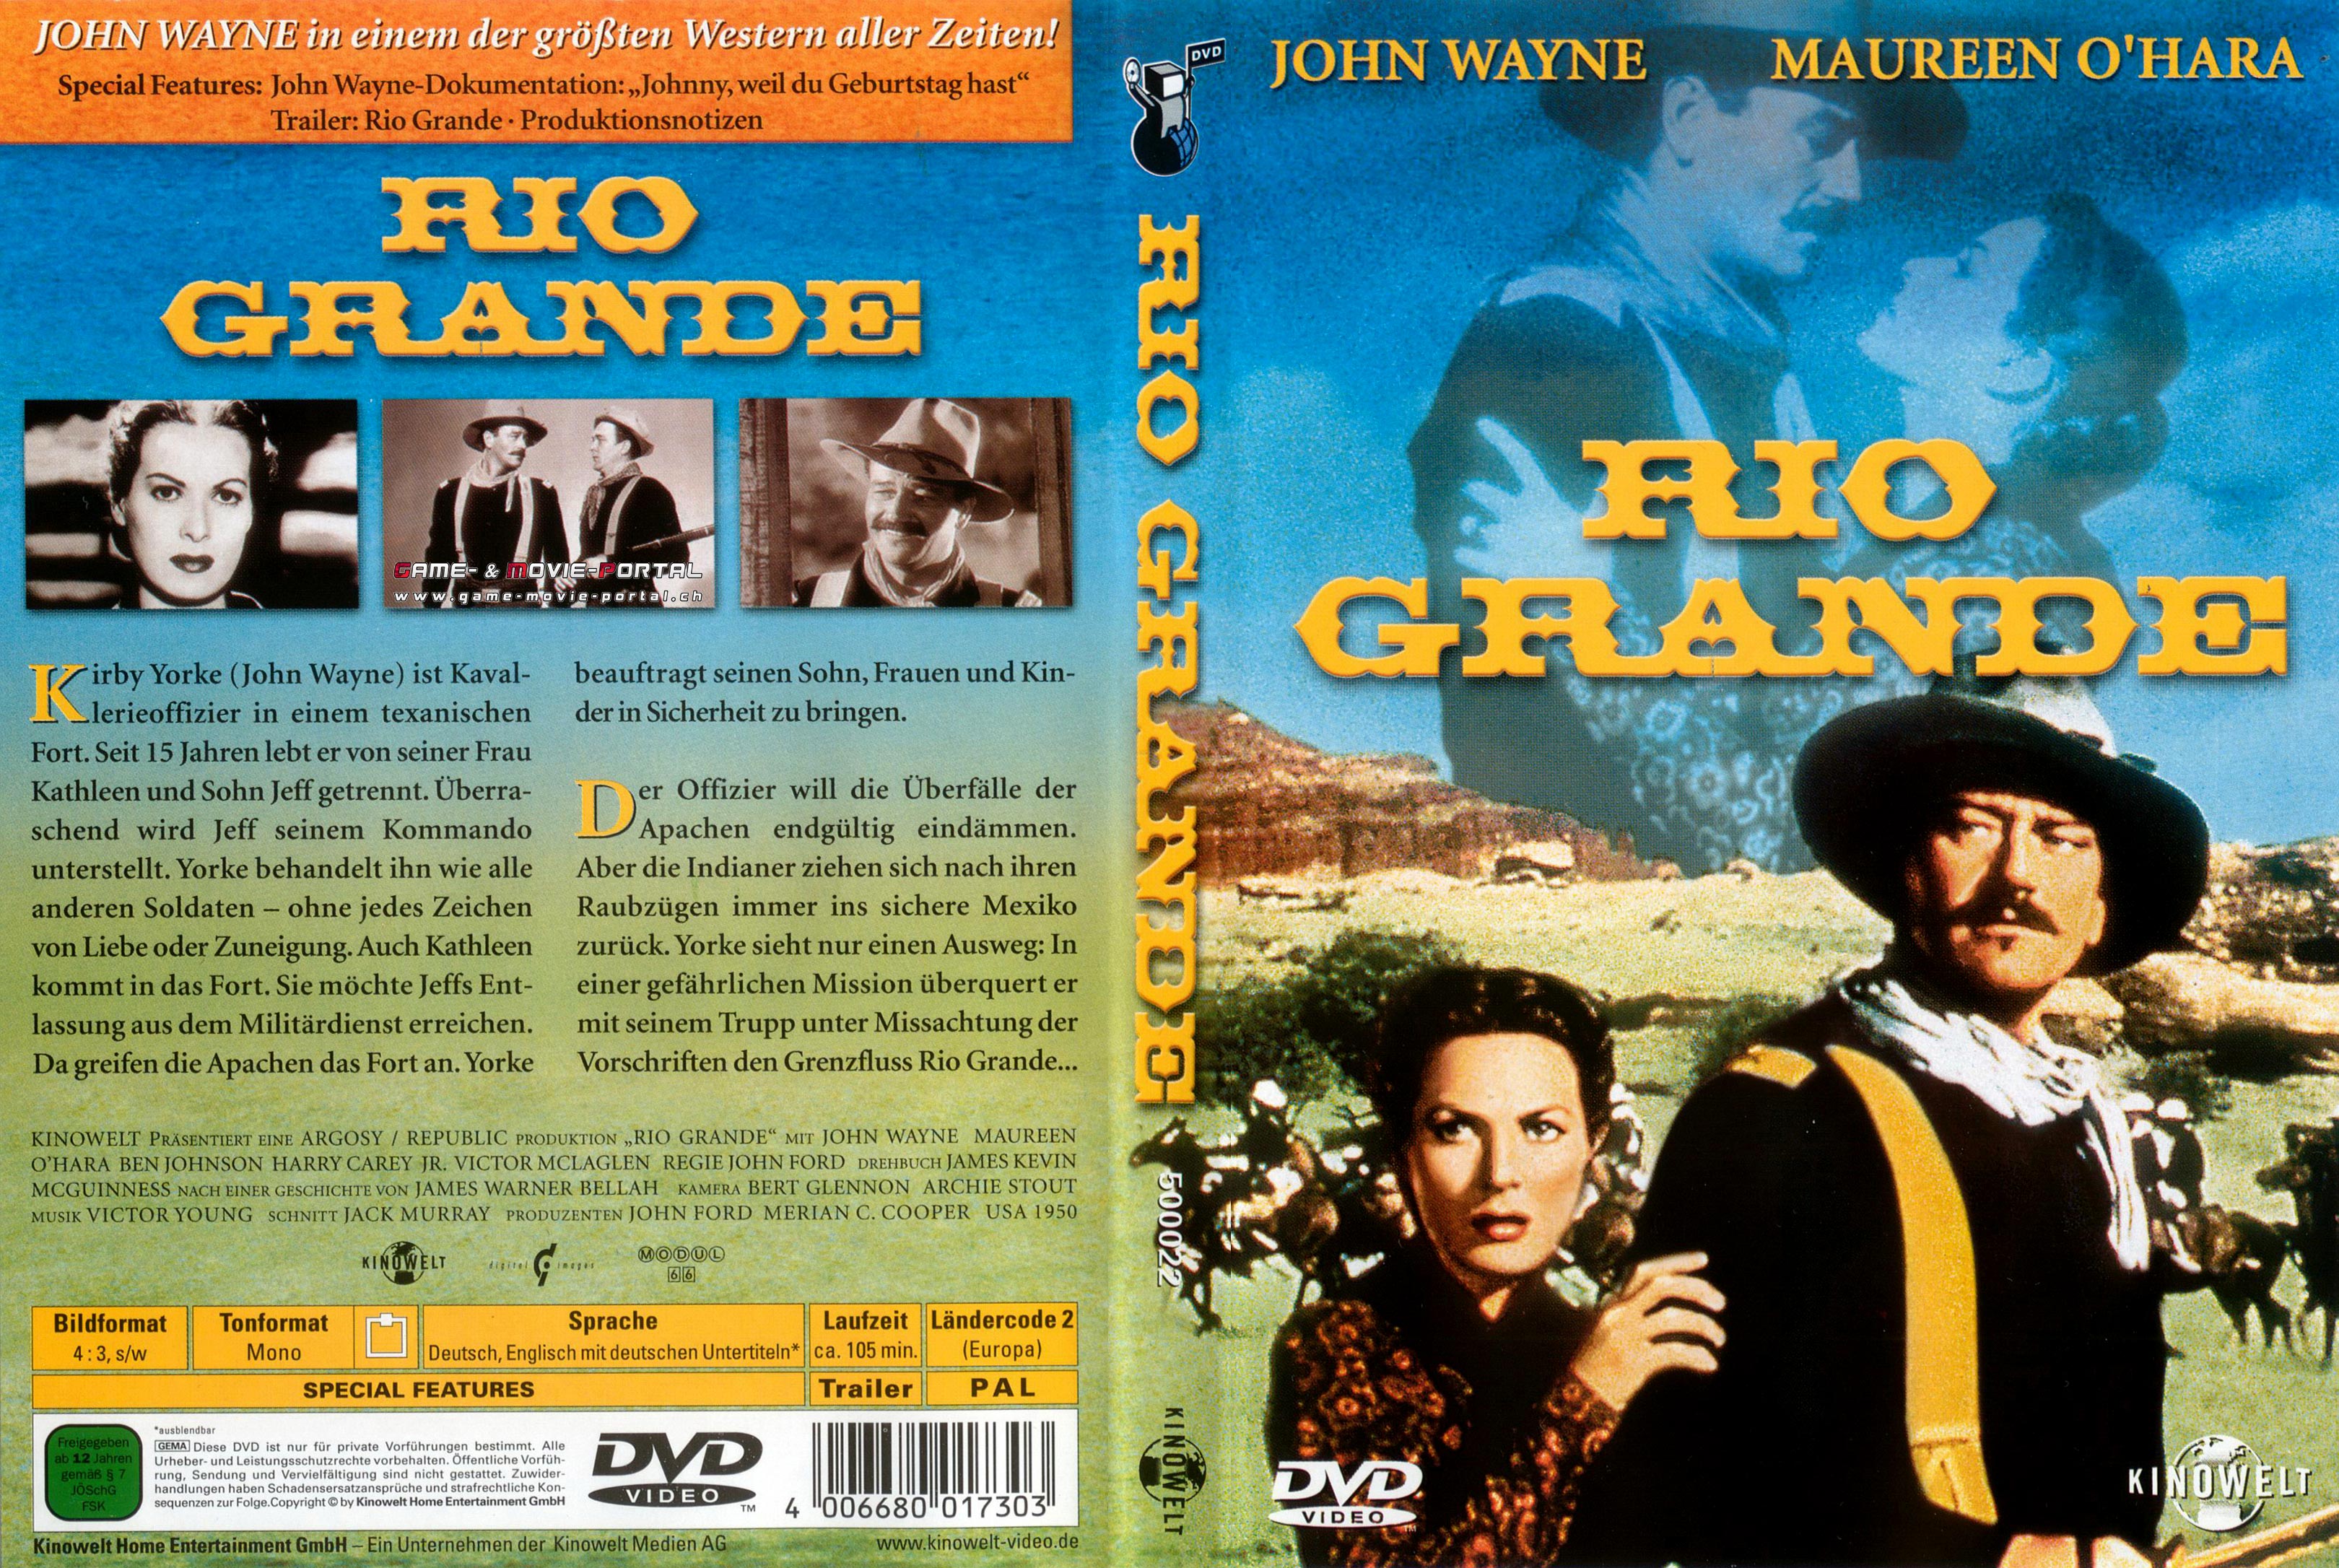 Deutsche Covers in german - Video DVD Covers auf deutsch